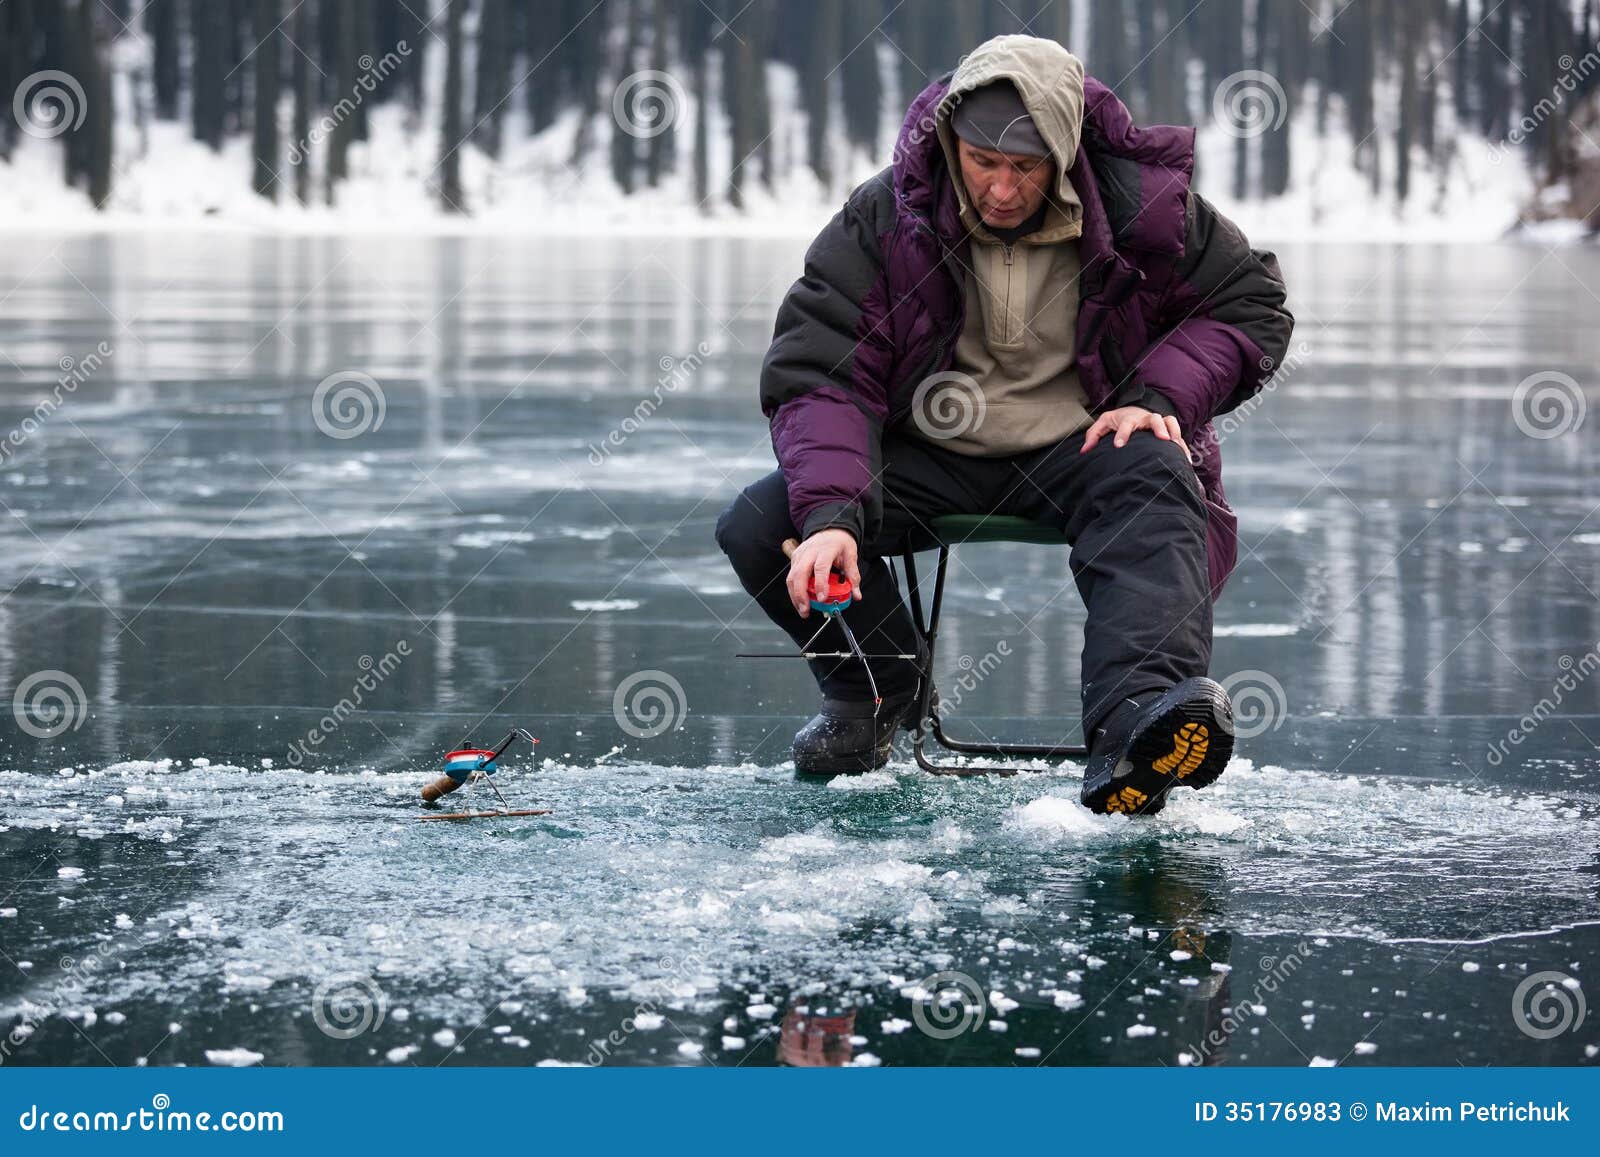 ice fisherman